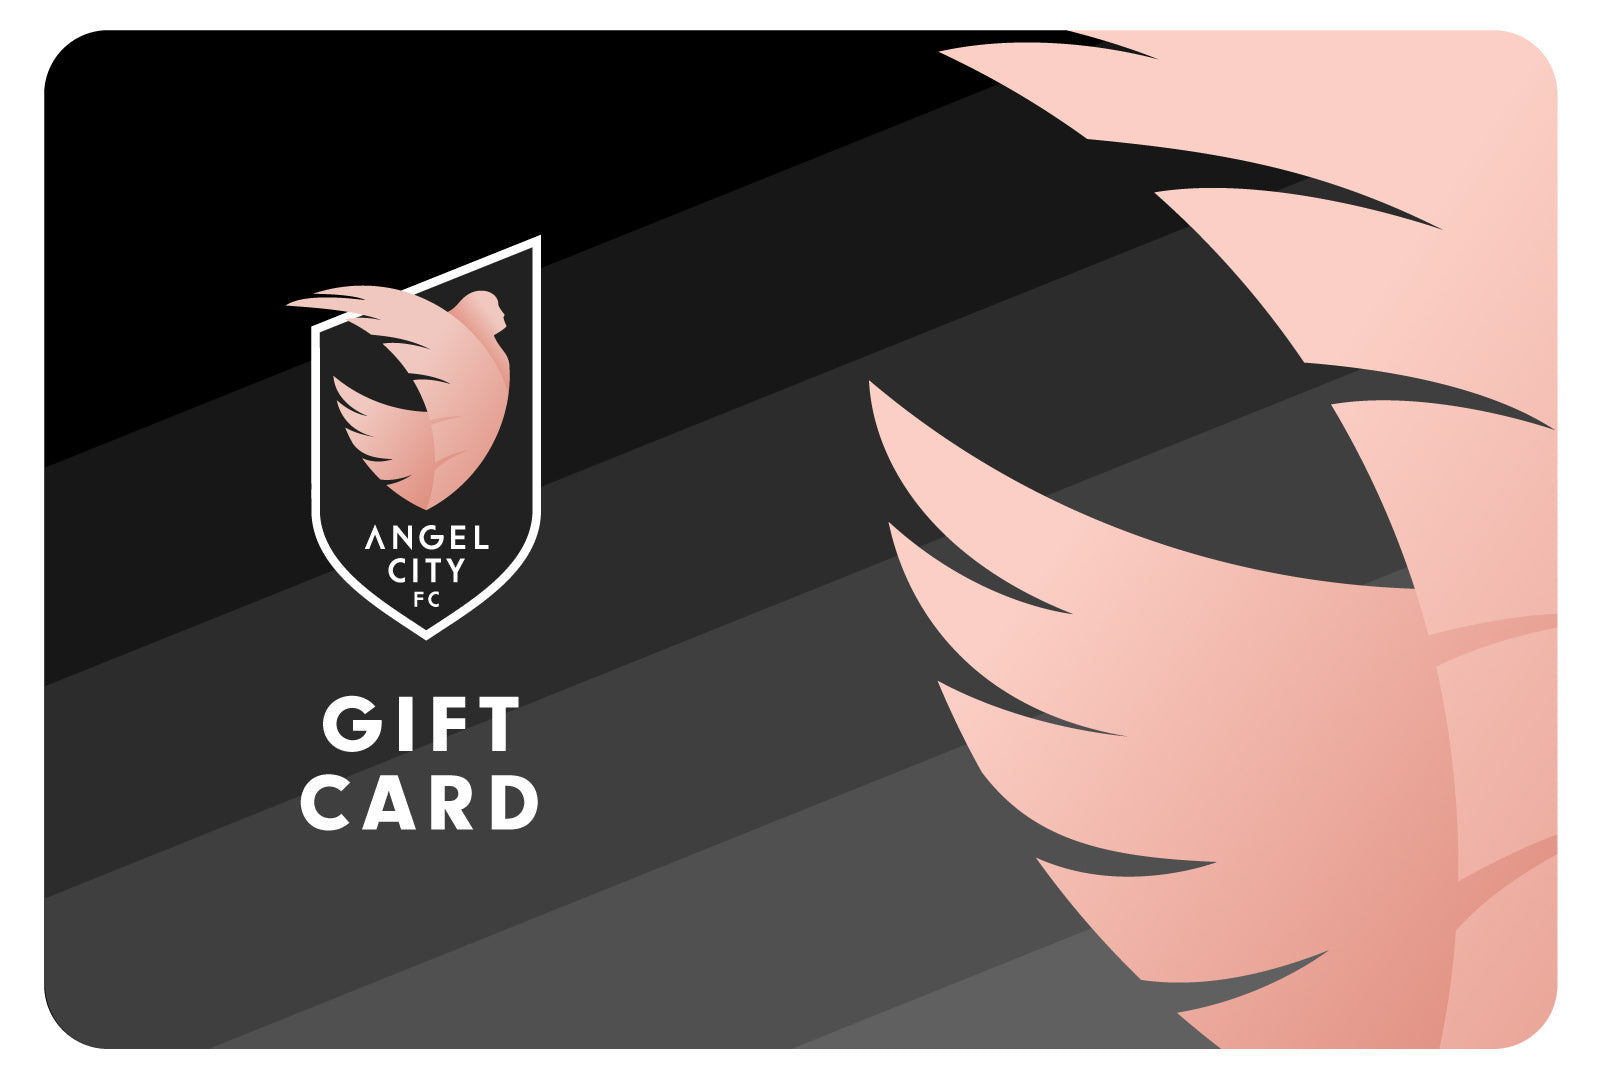 Angel City FC Gift Card